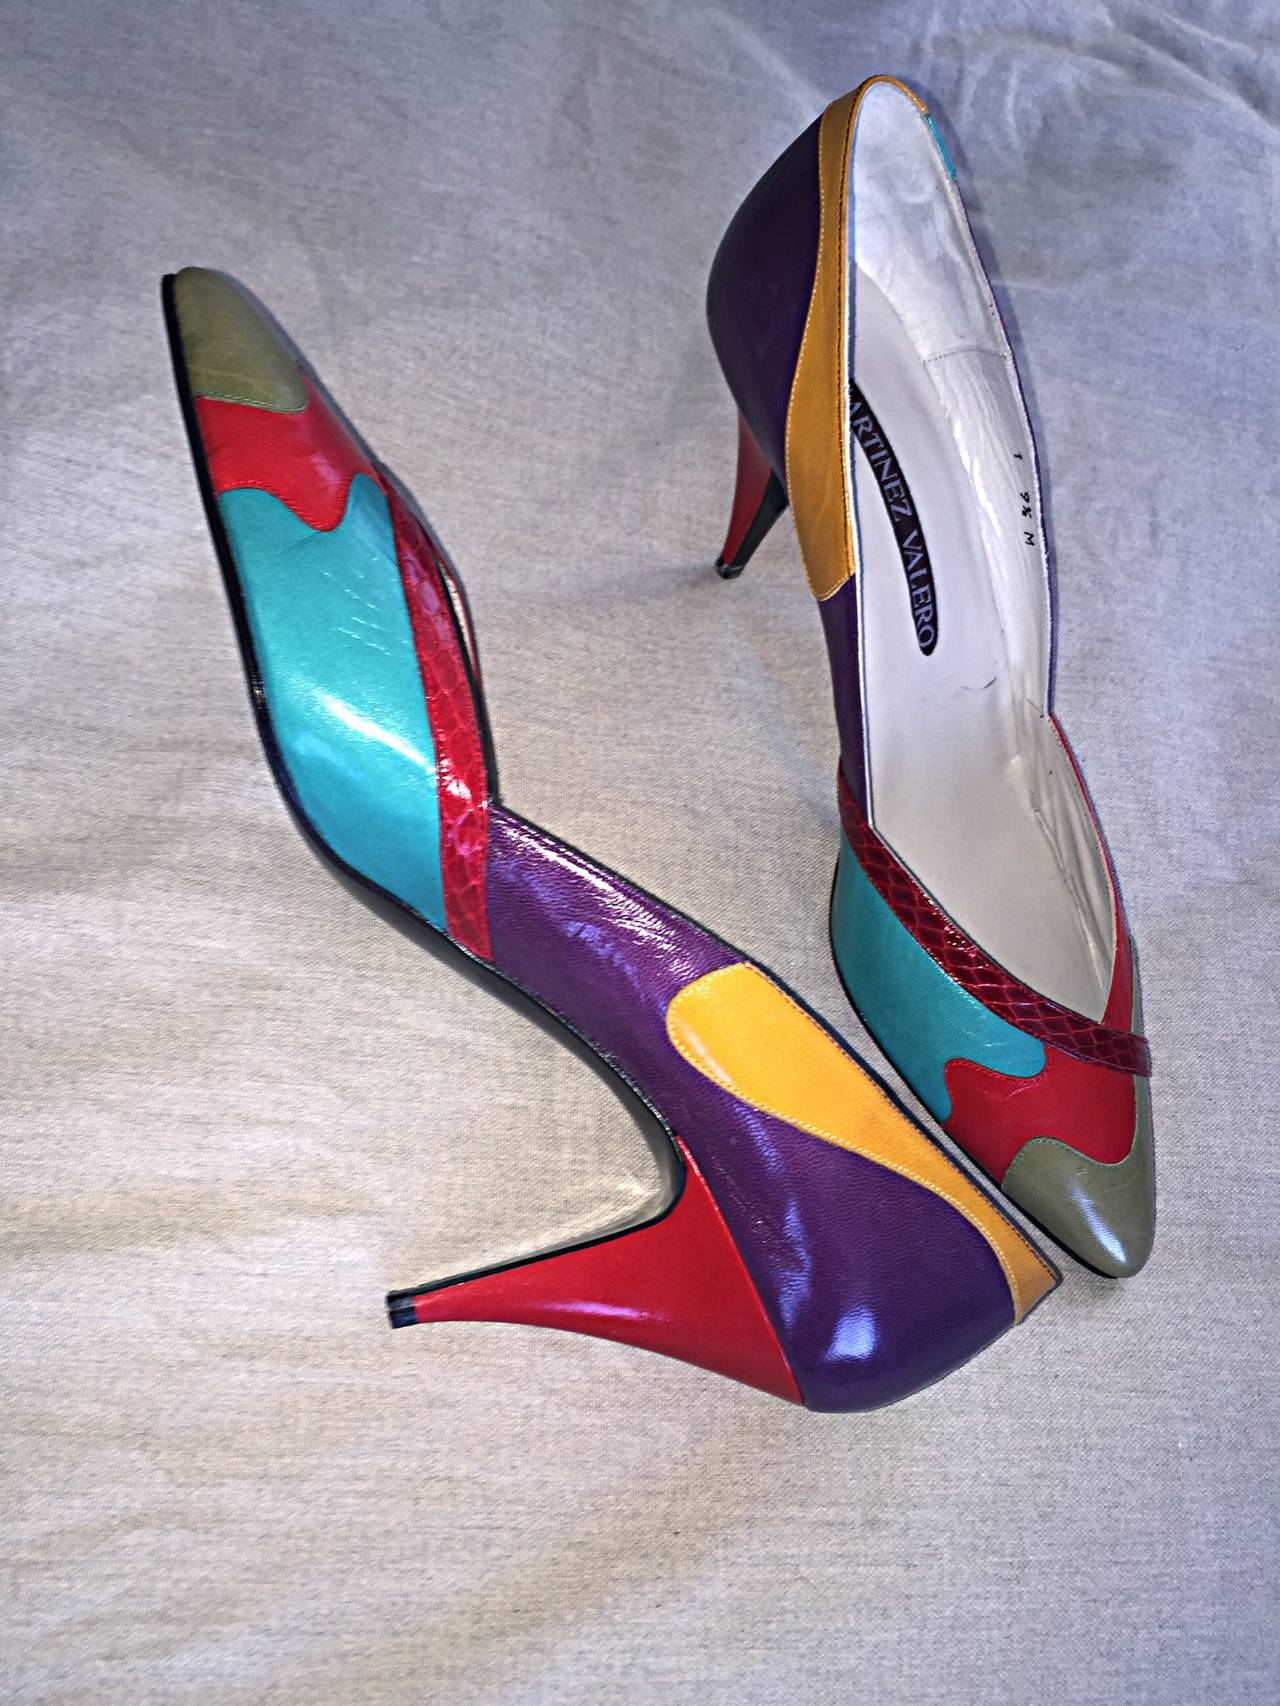 New 1980s Sz. 9.5 Color Block Leather / Snakeskin High Heels / Vintage Shoes 2